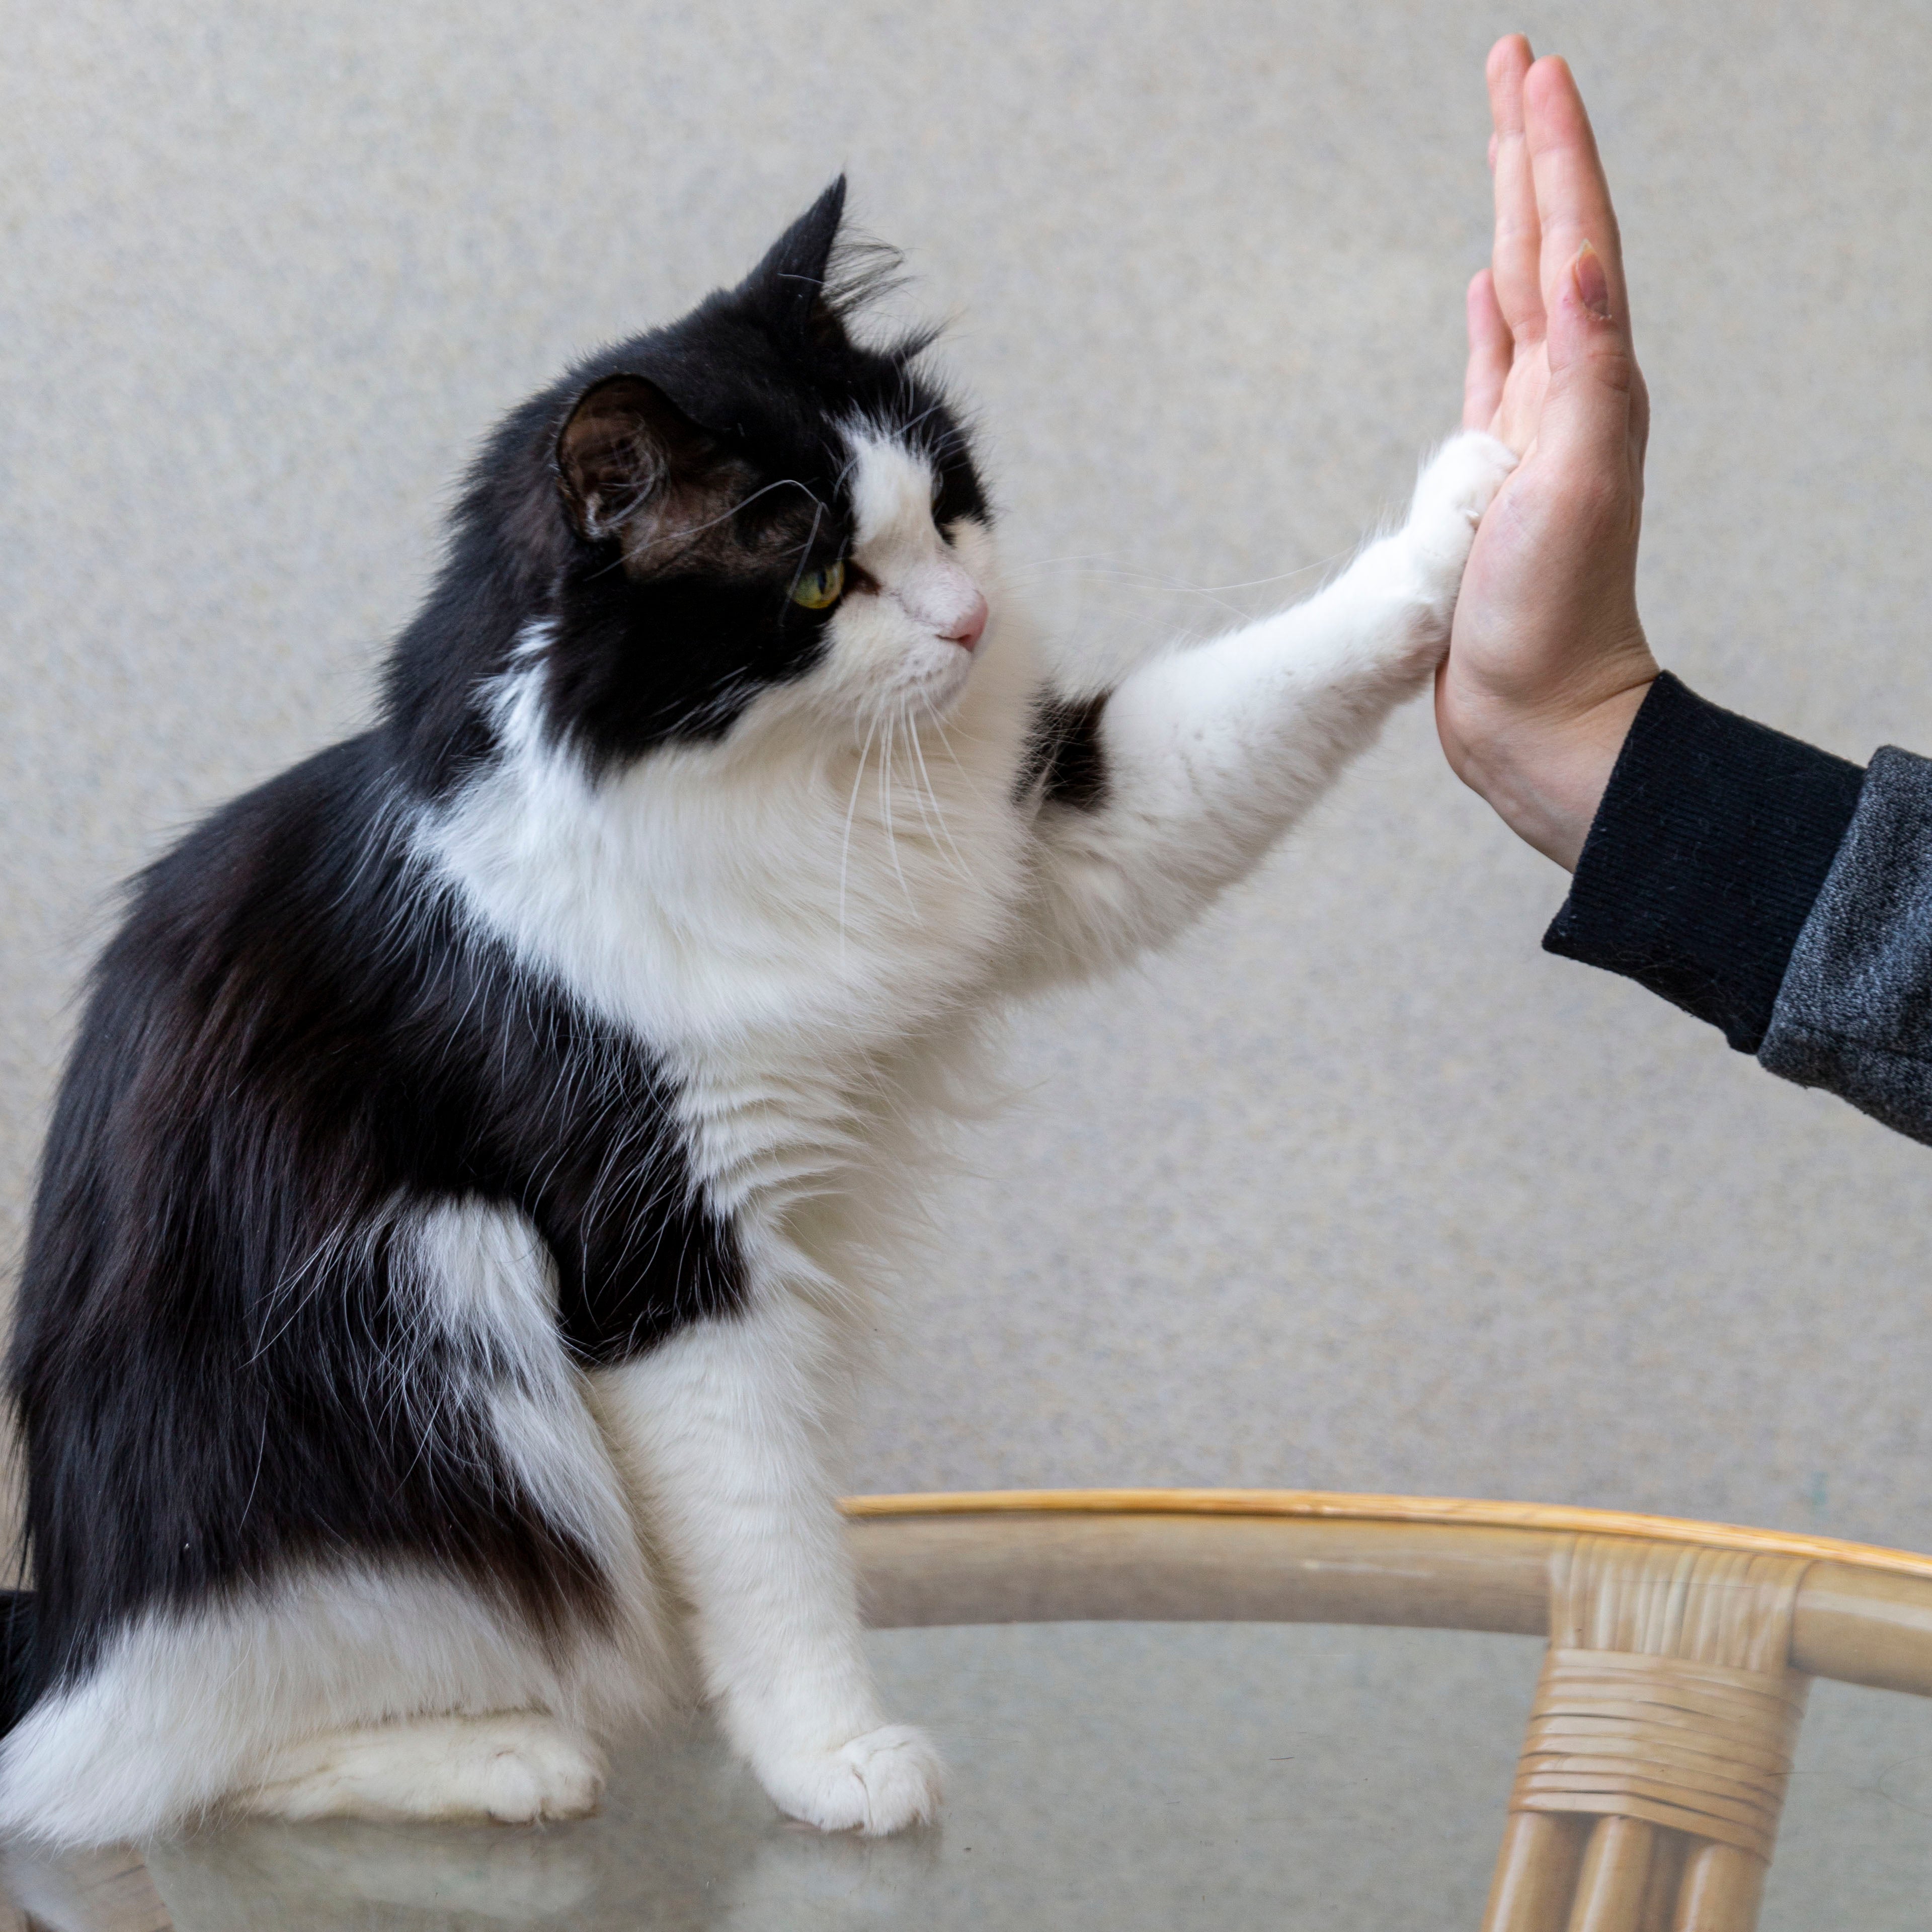 How to Train Your Cat: Basic Behavior Training and Correcting Bad Habits